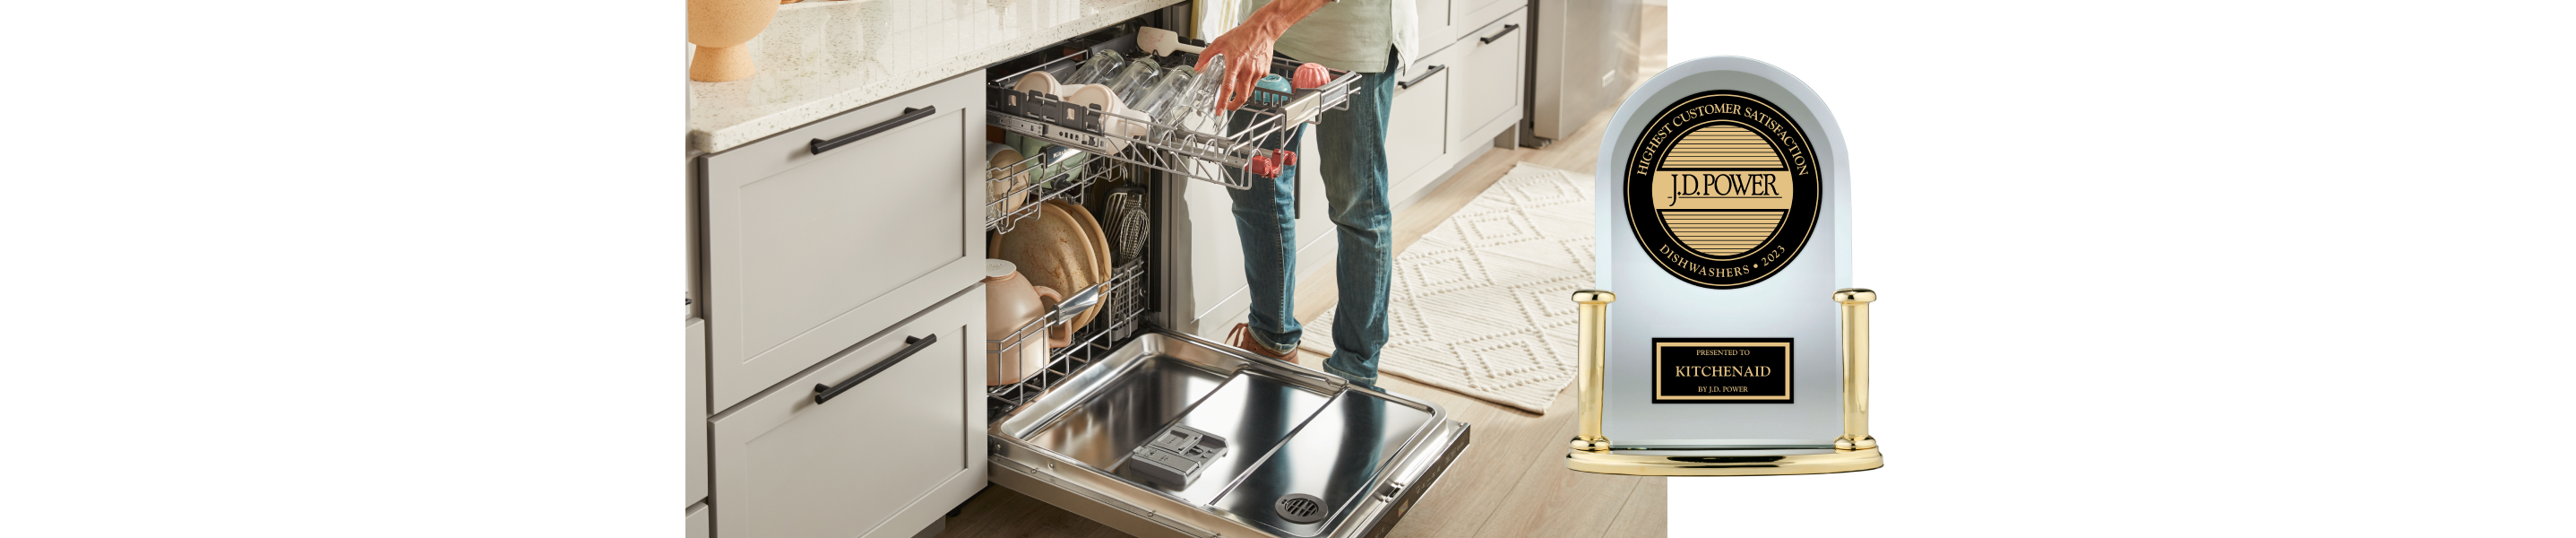 KitchenAid Dishwasher Review 2021: Large, Quiet Dishwasher for Family